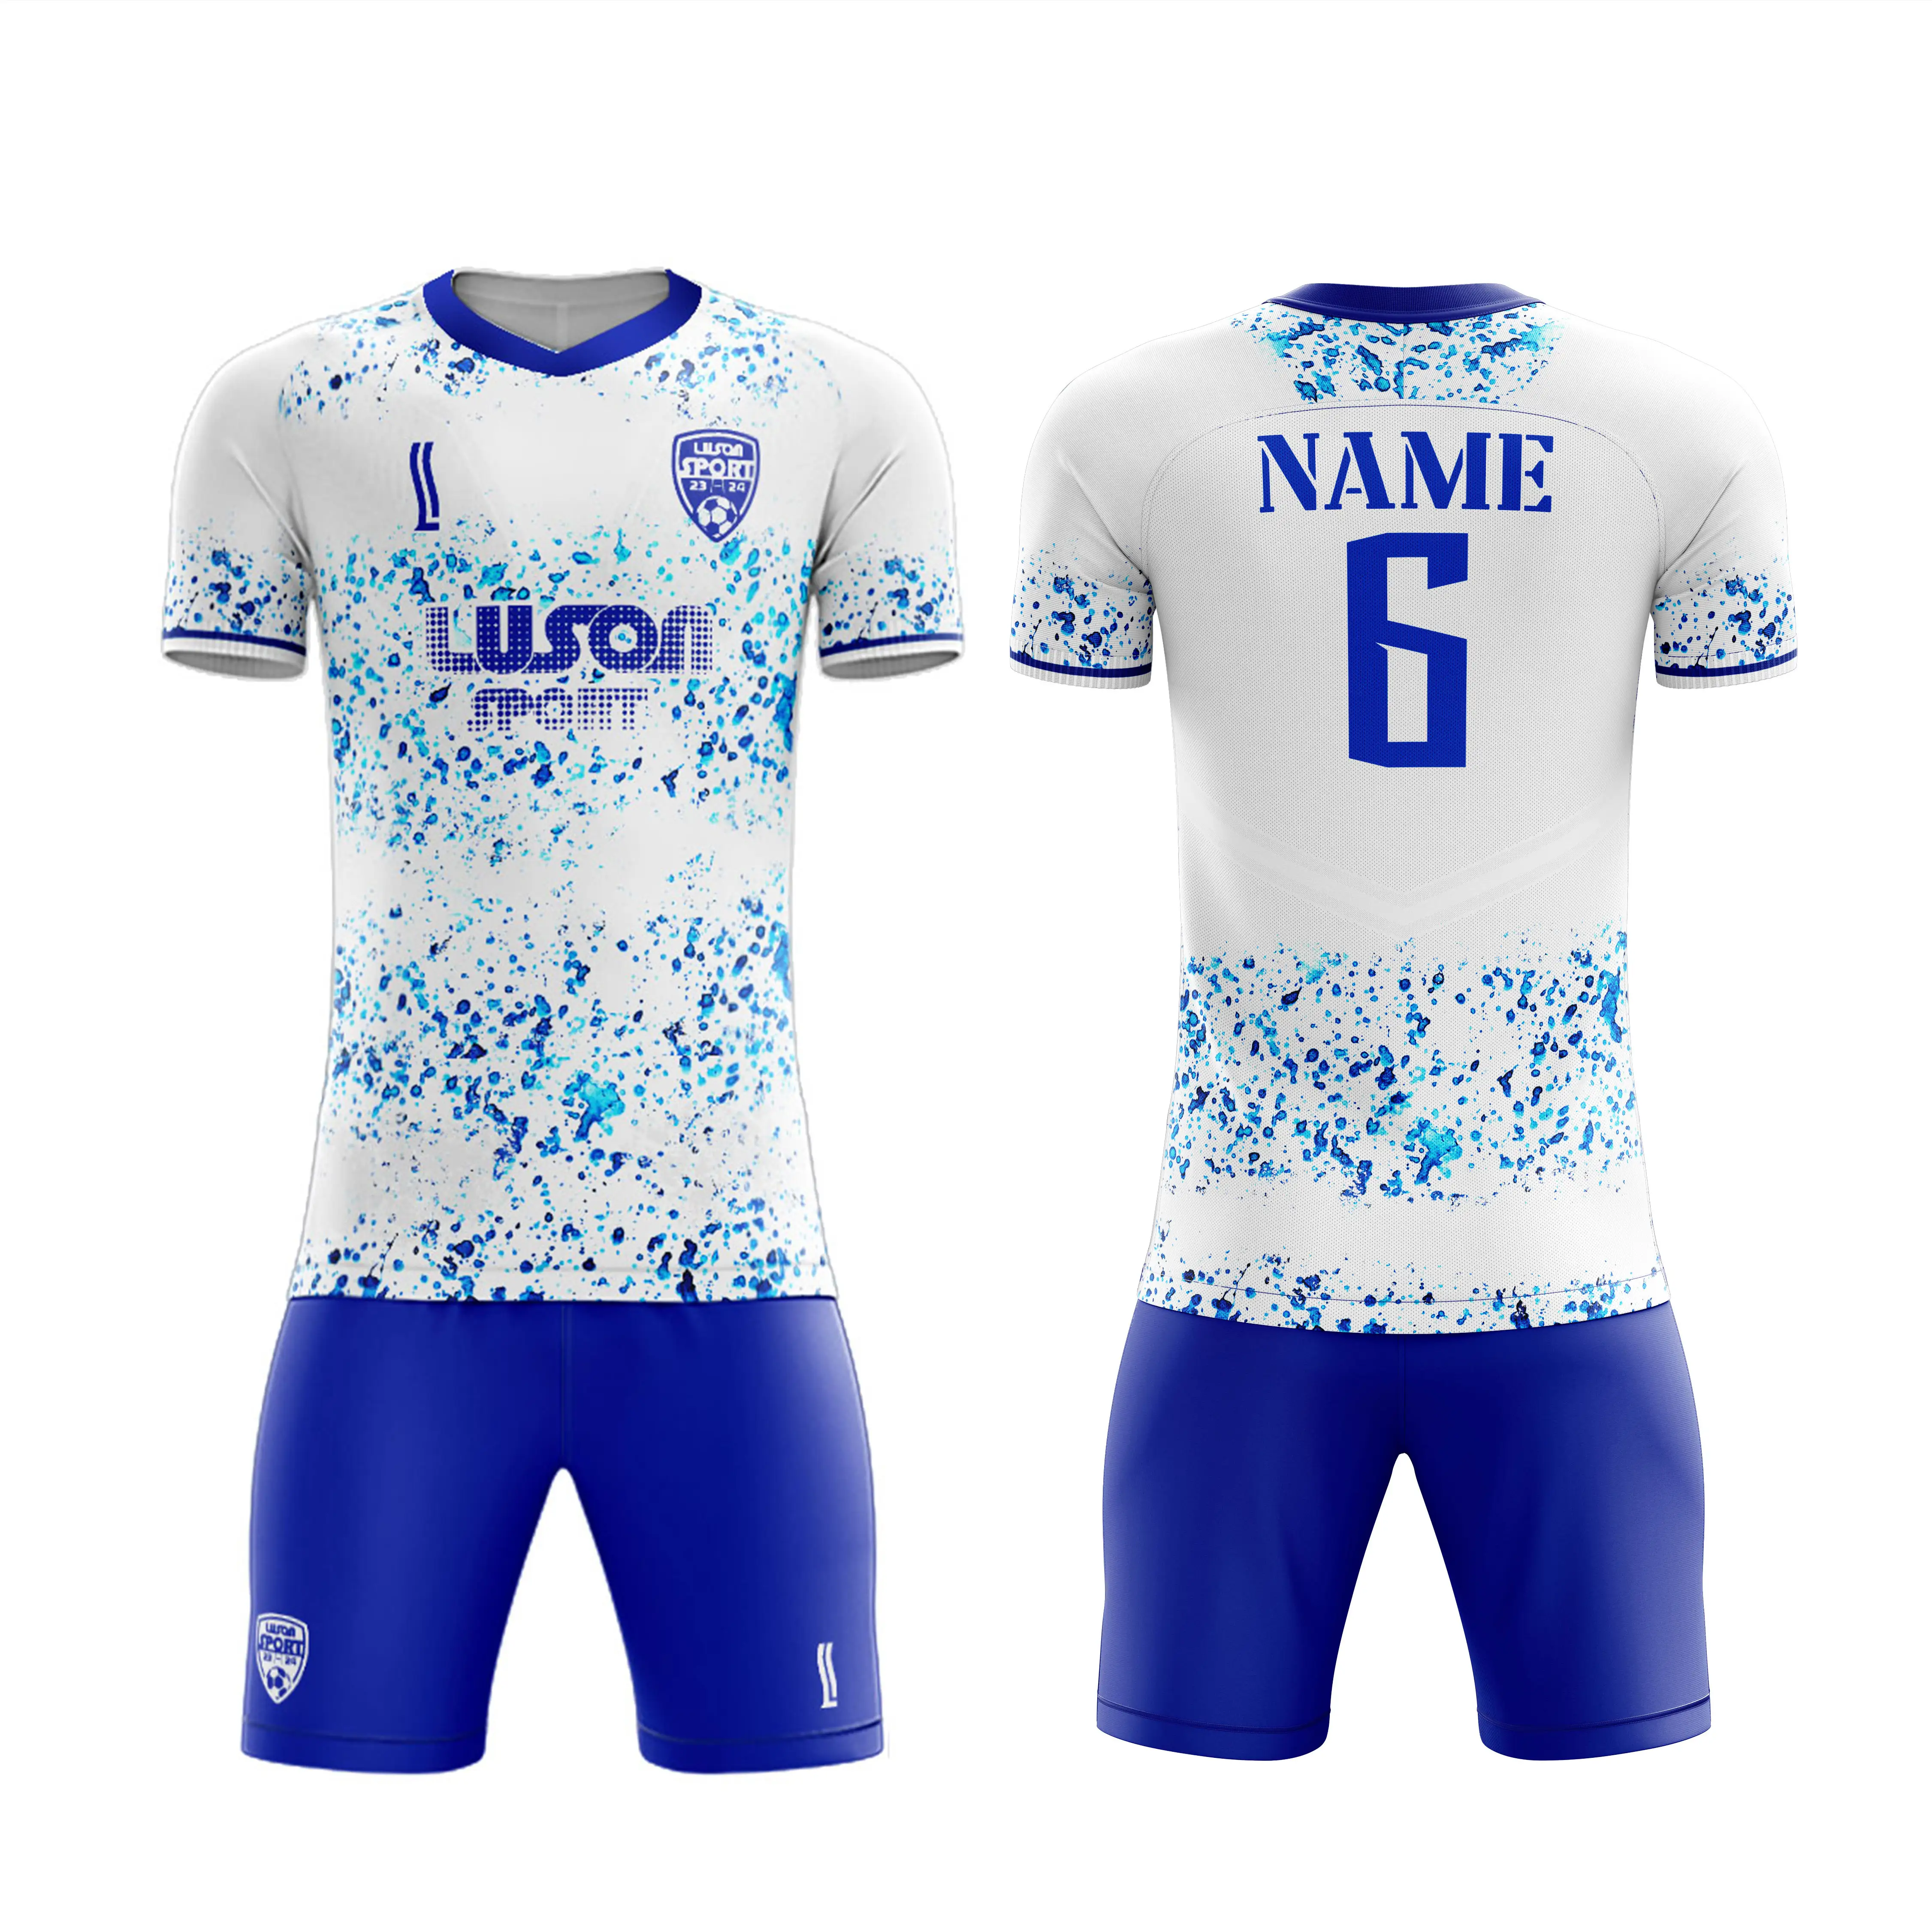 Luson Camisetas De Futbol New Mexico Model Wholesale Soccer Uniforms National Team Soccer Jersey With Best Quality